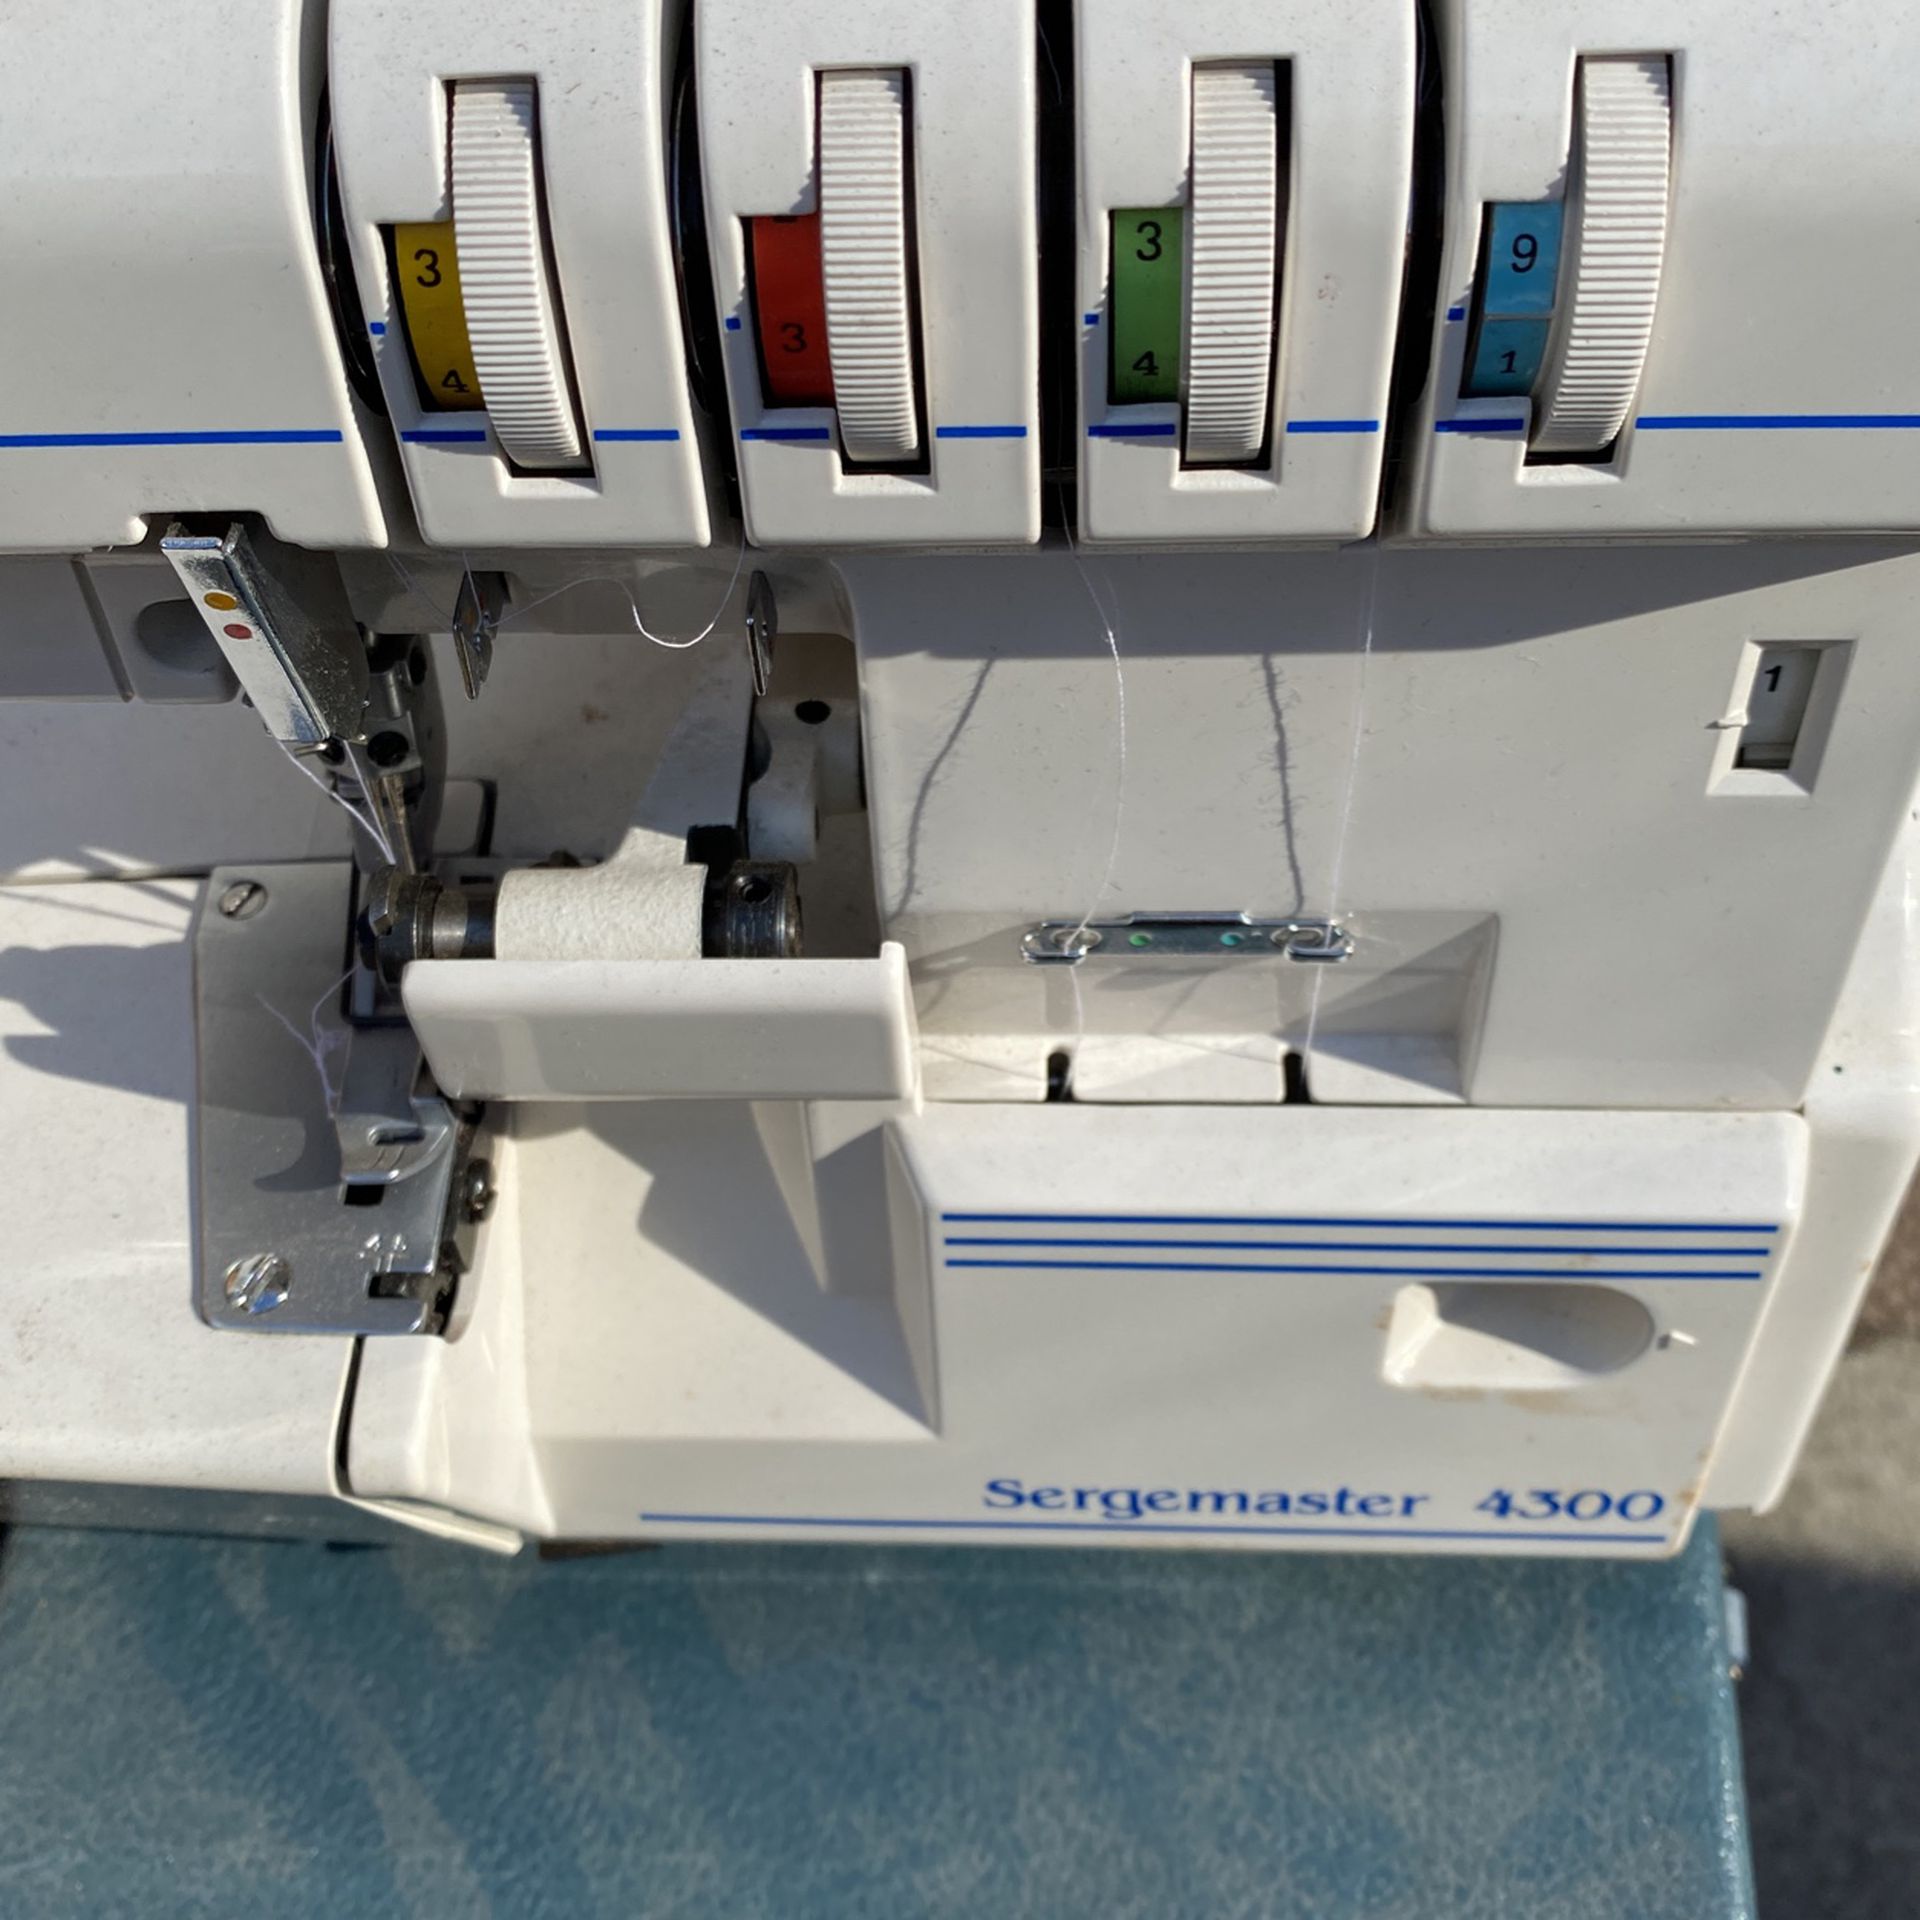 Sergemaster 4300 sewing machine An embroider